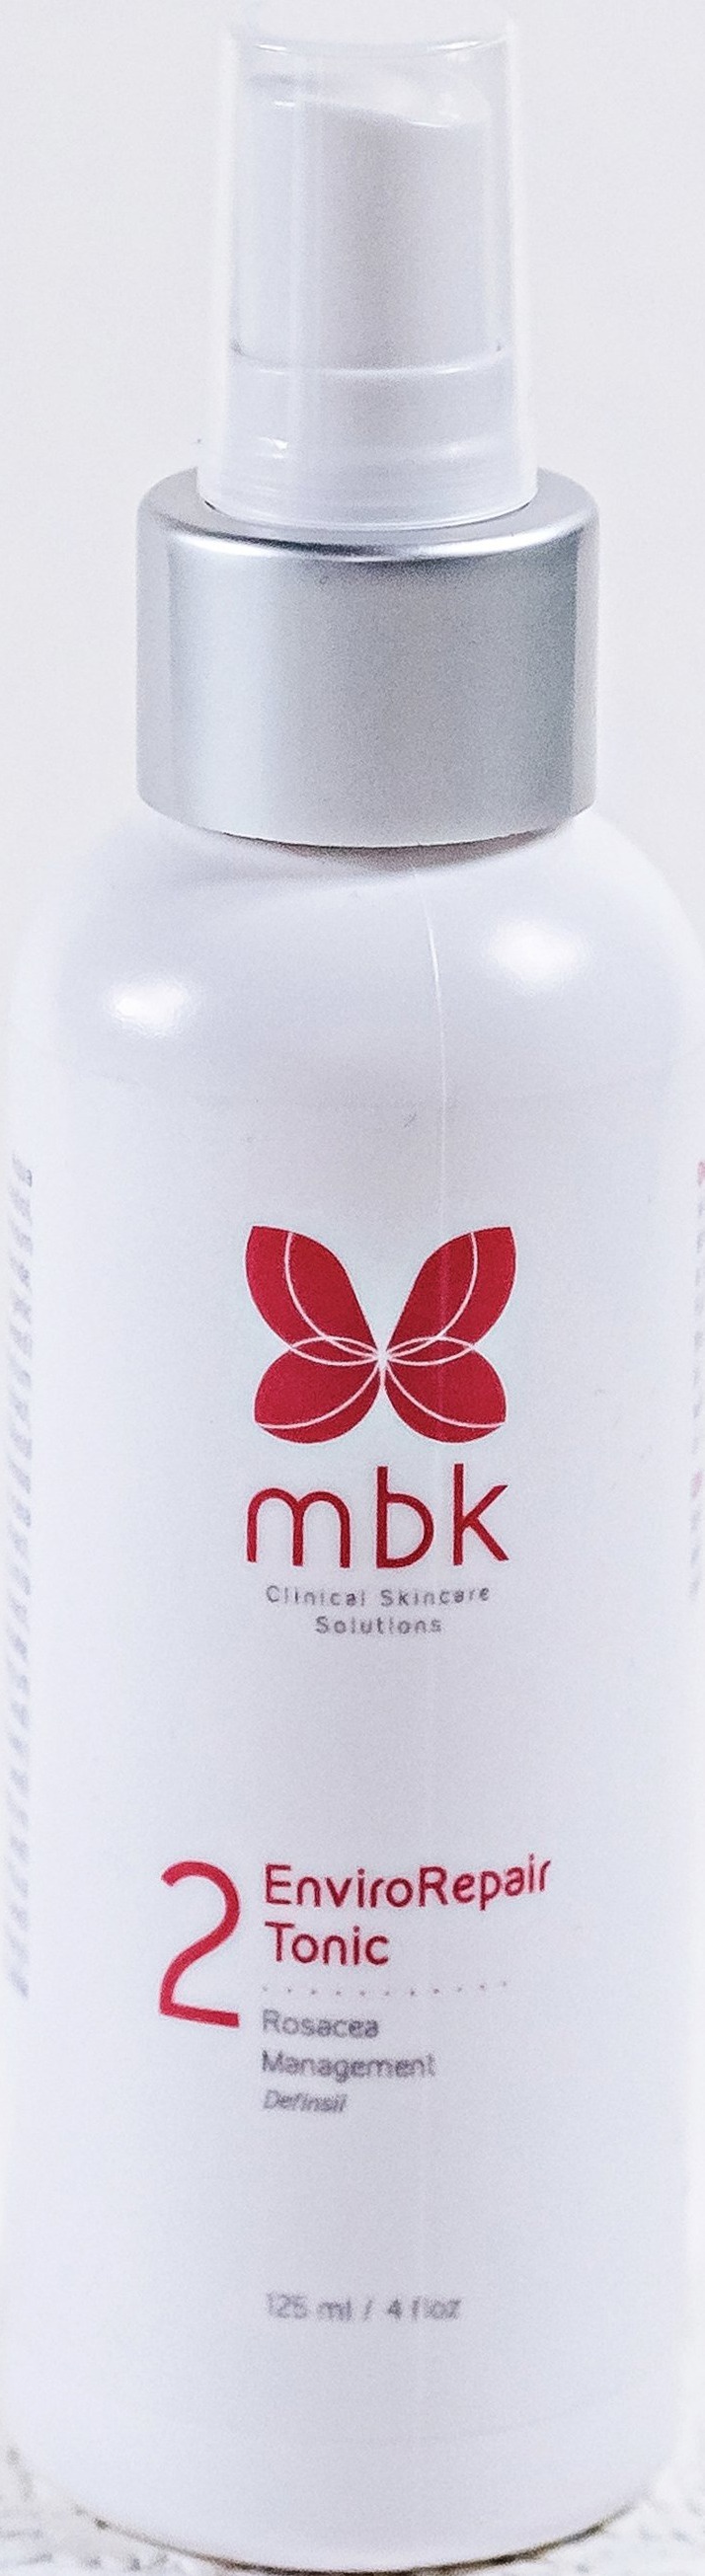 MBK Clinical Skincare Solutions Envirorepair Tonic